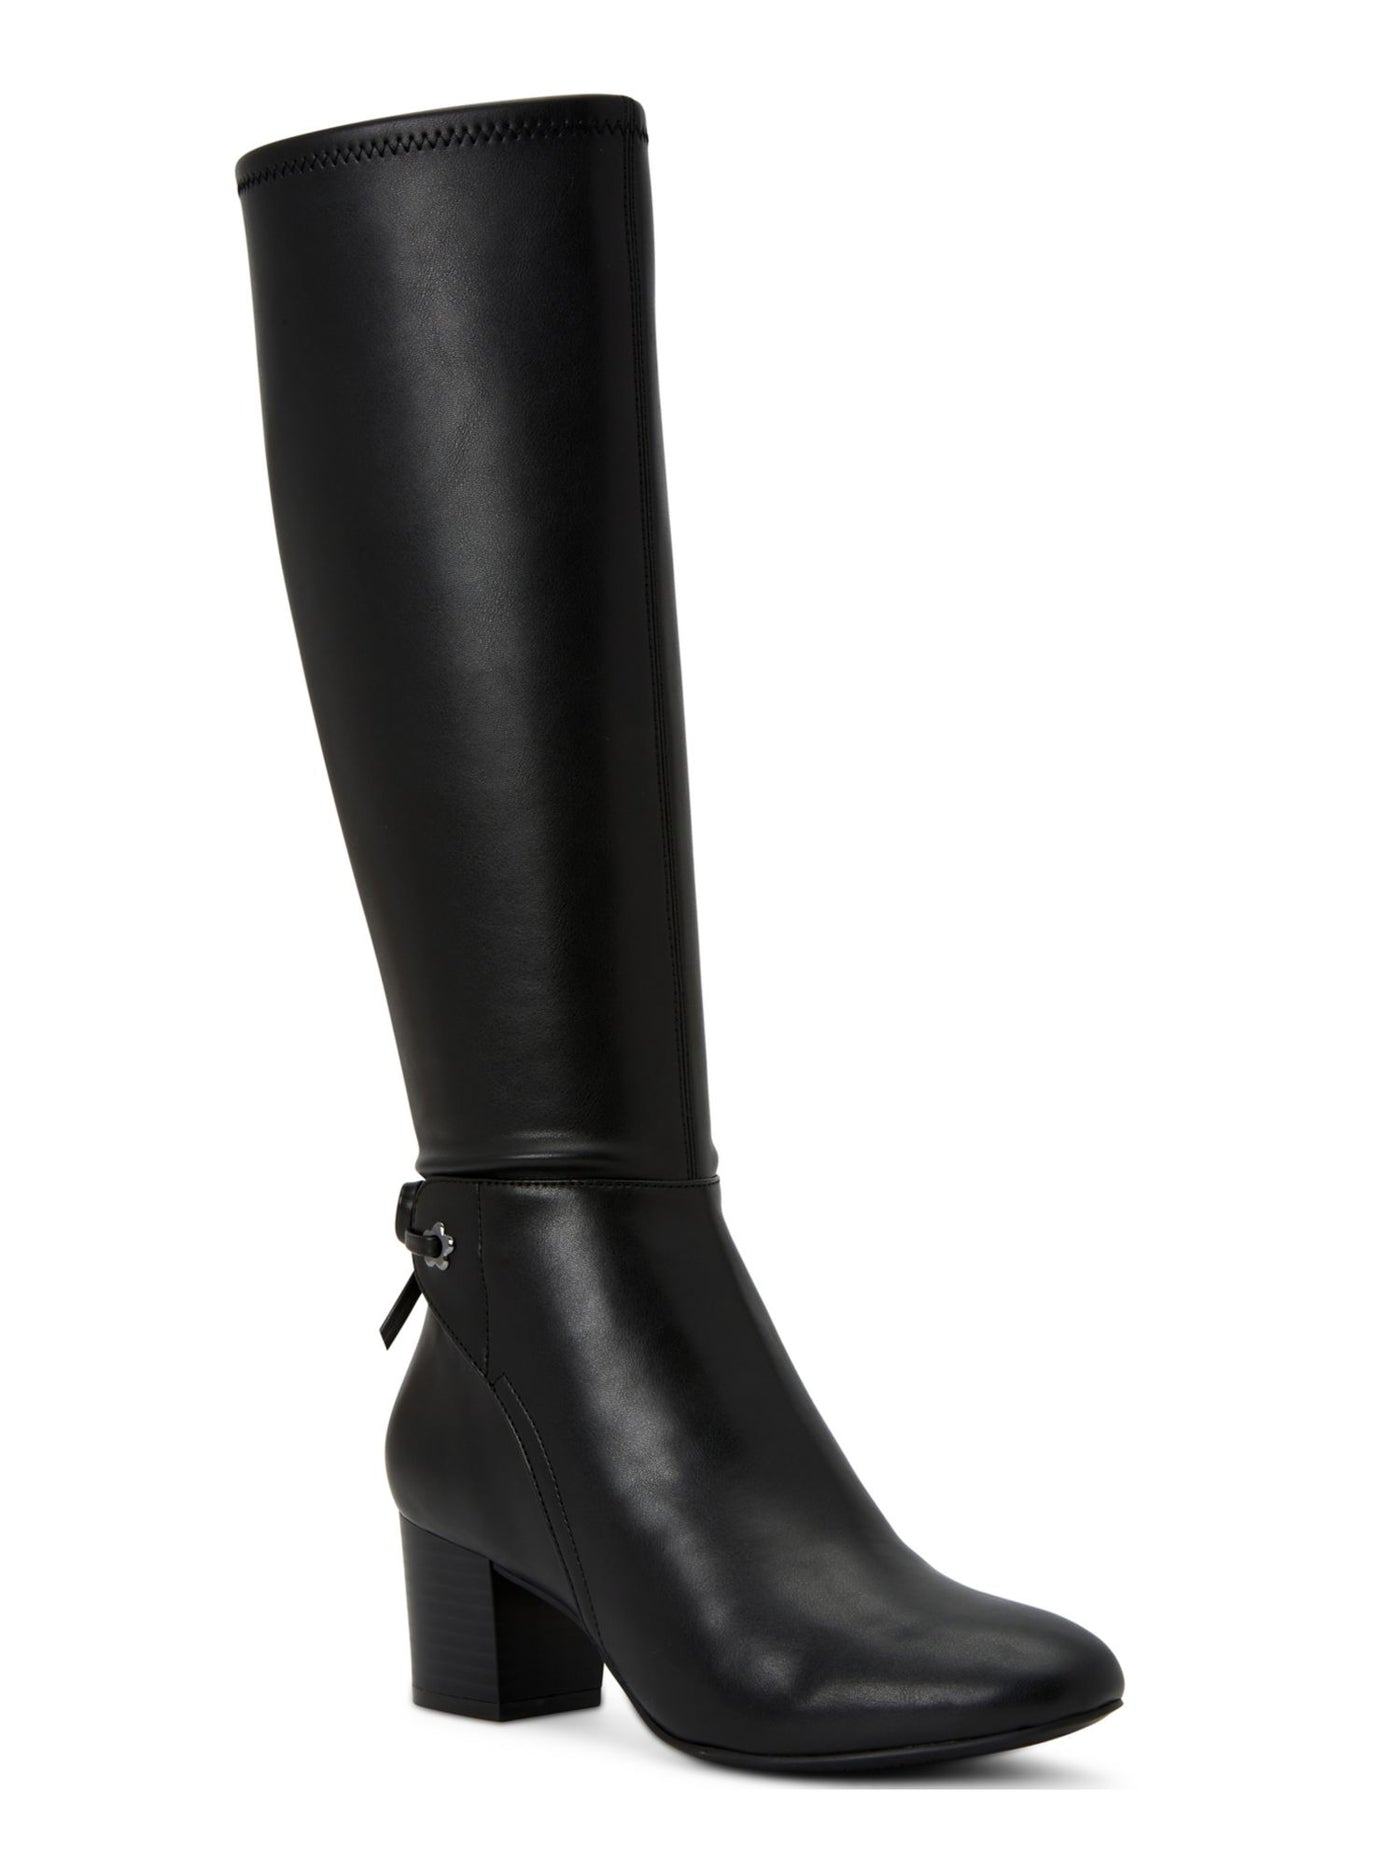 CHARTER CLUB Womens Black Bow Accent Almond Toe Block Heel Zip-Up Dress Boots 8.5